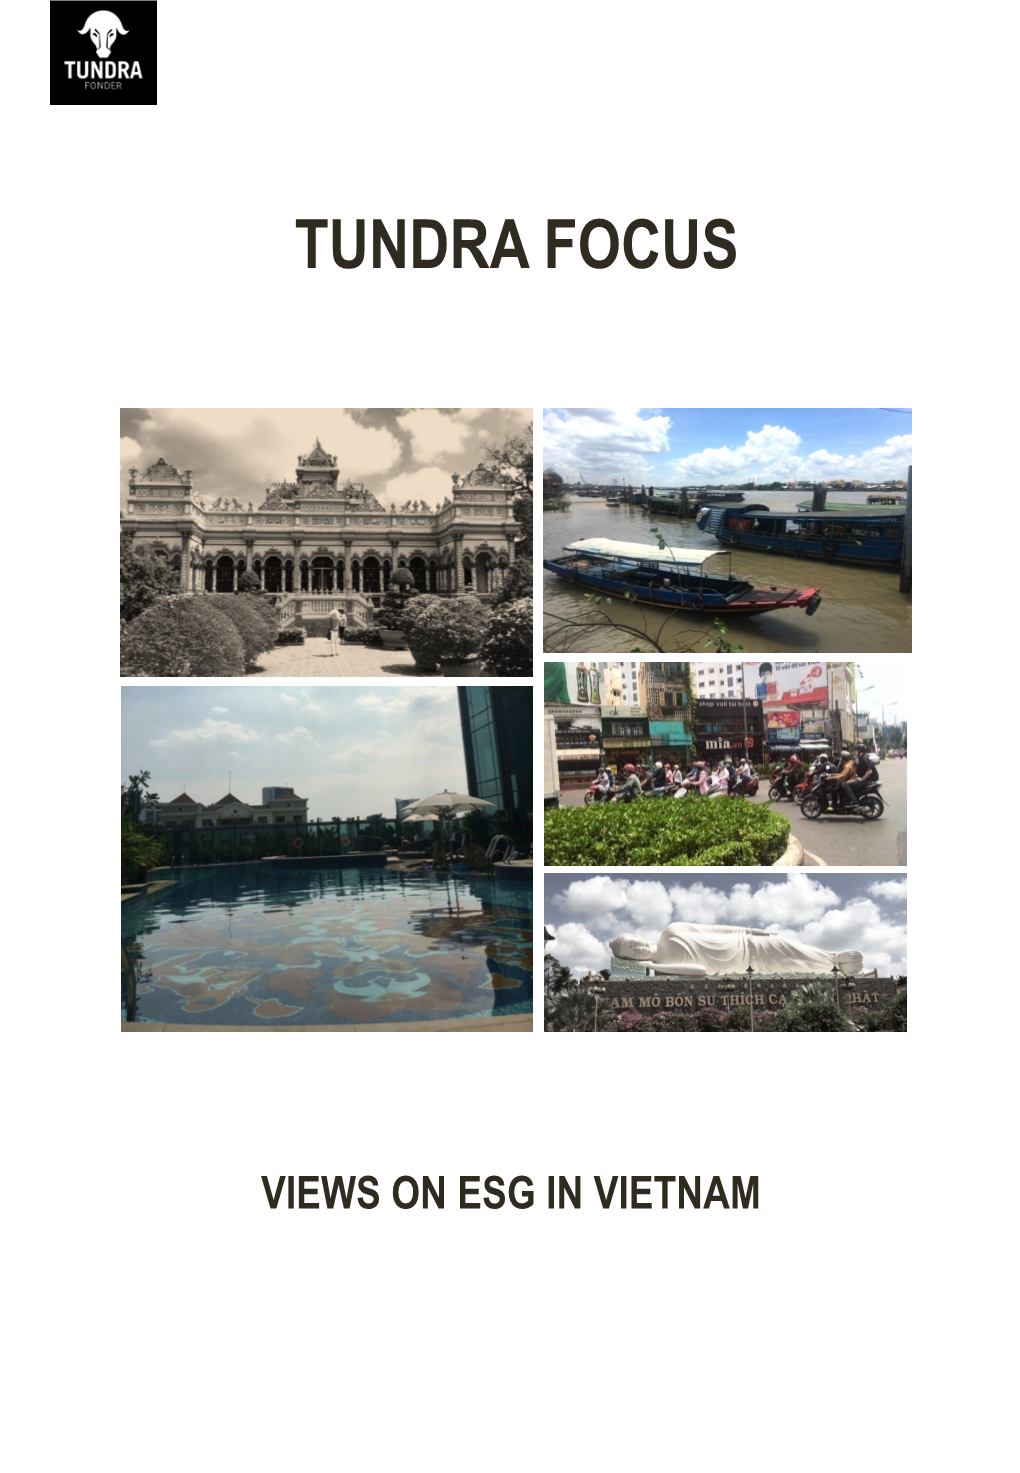 Tundra Focus – Views on ESG in Vietnam